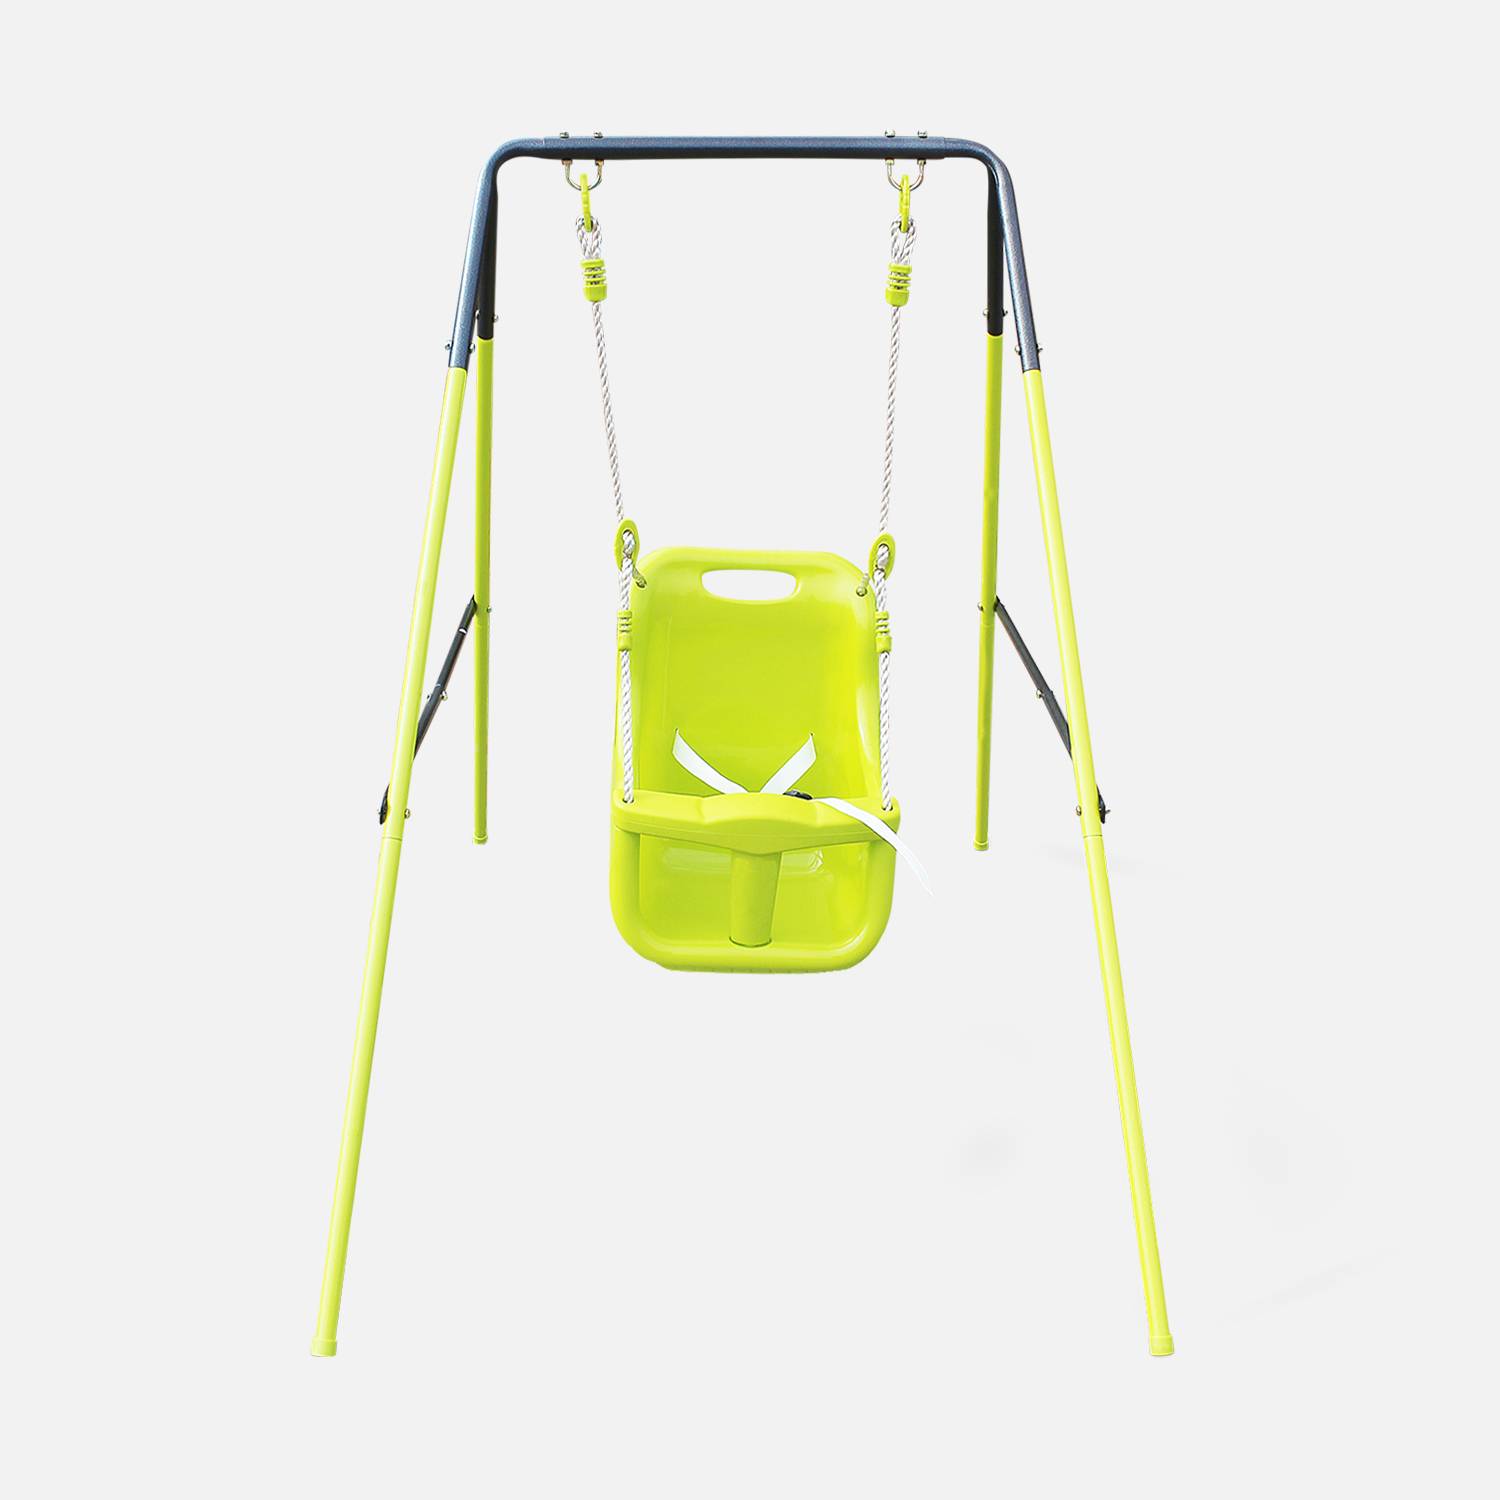 Toddler and kids garden swing, 97x147x118cm, Farou, Metal frame, Plastic seat, Green,sweeek,Photo2